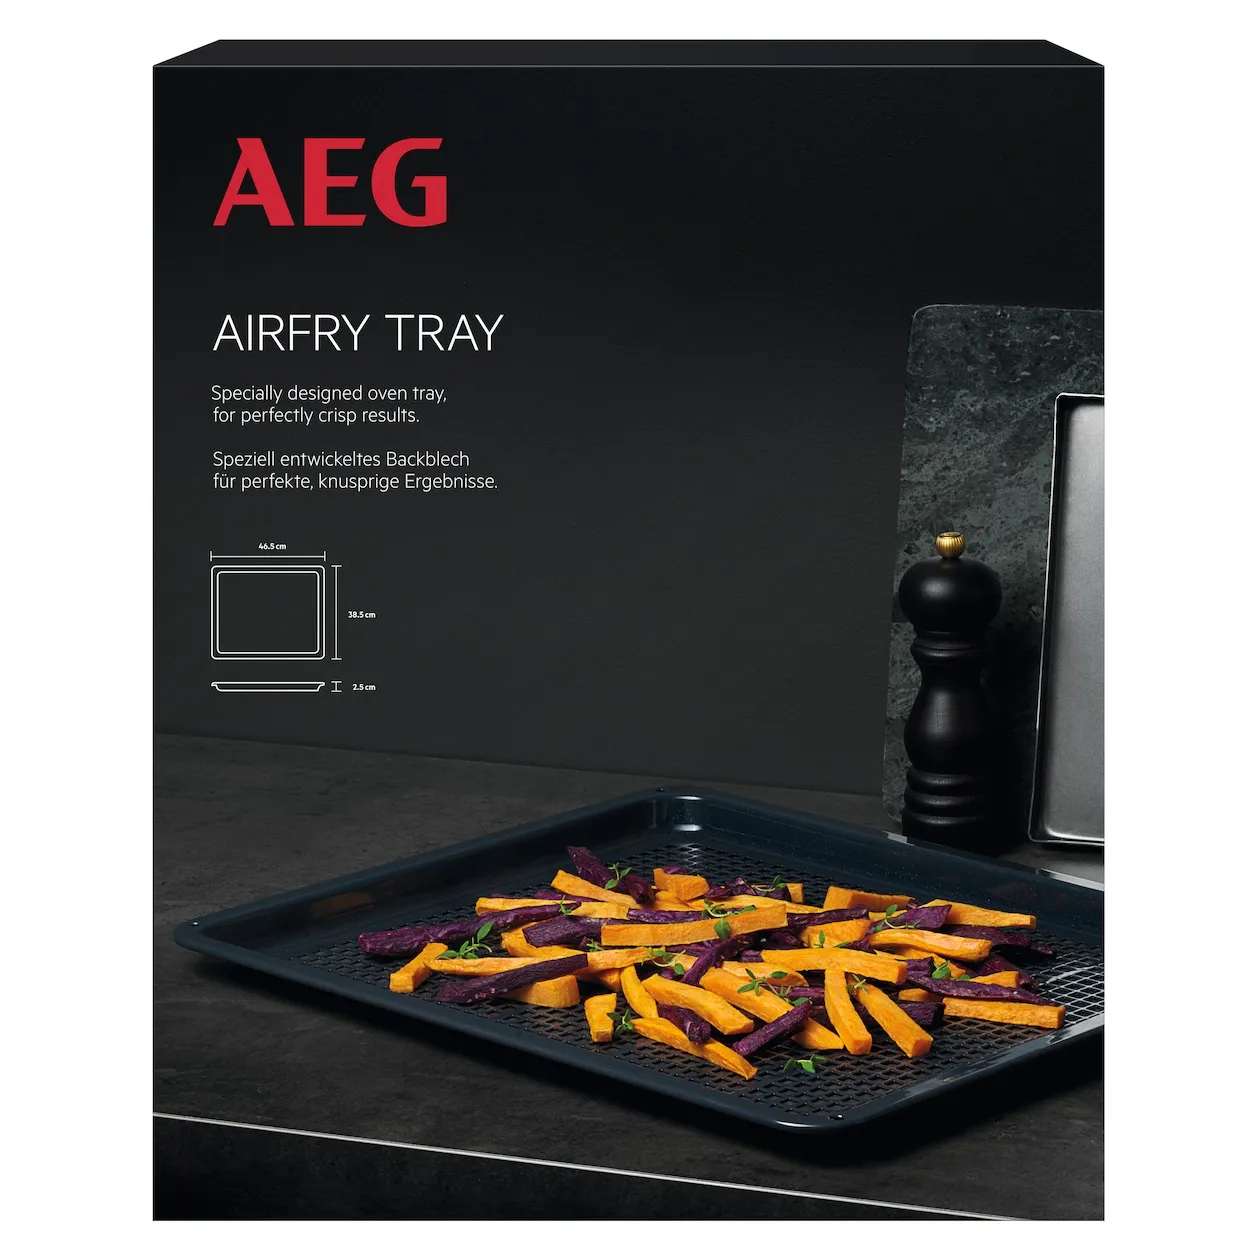 AEG AirFry Tray bakplaat